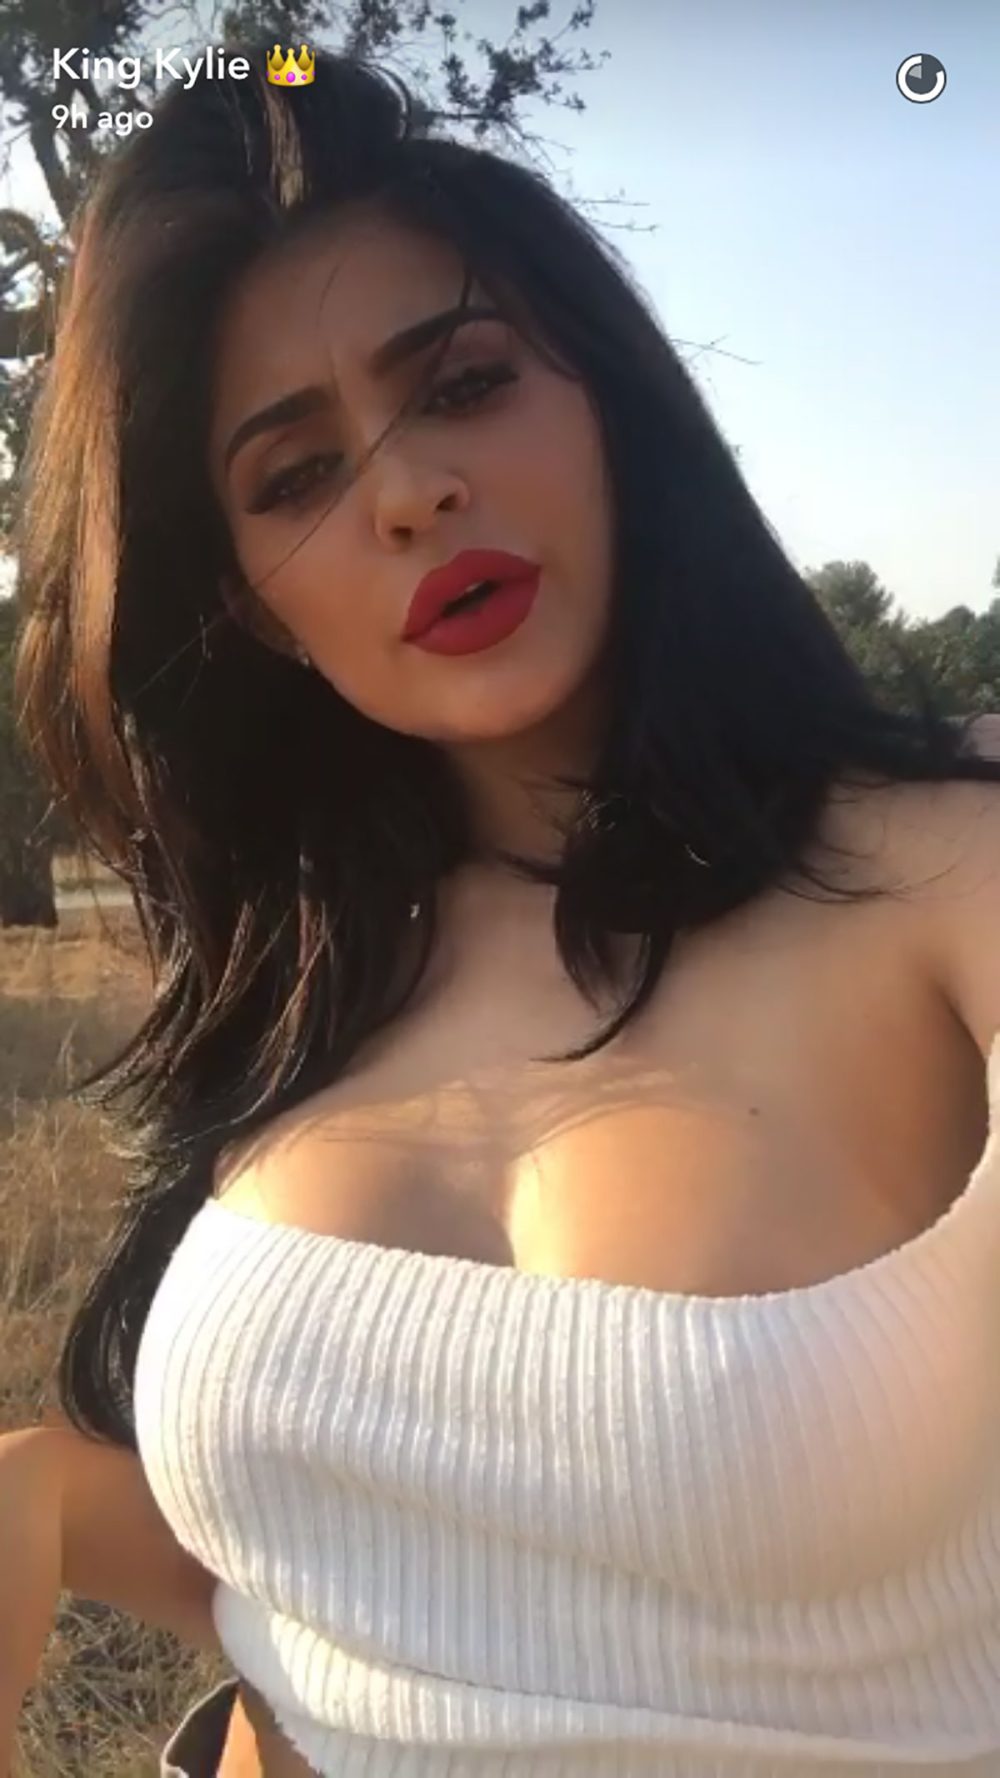 Kylie Jenner Denies Having Breast Implants